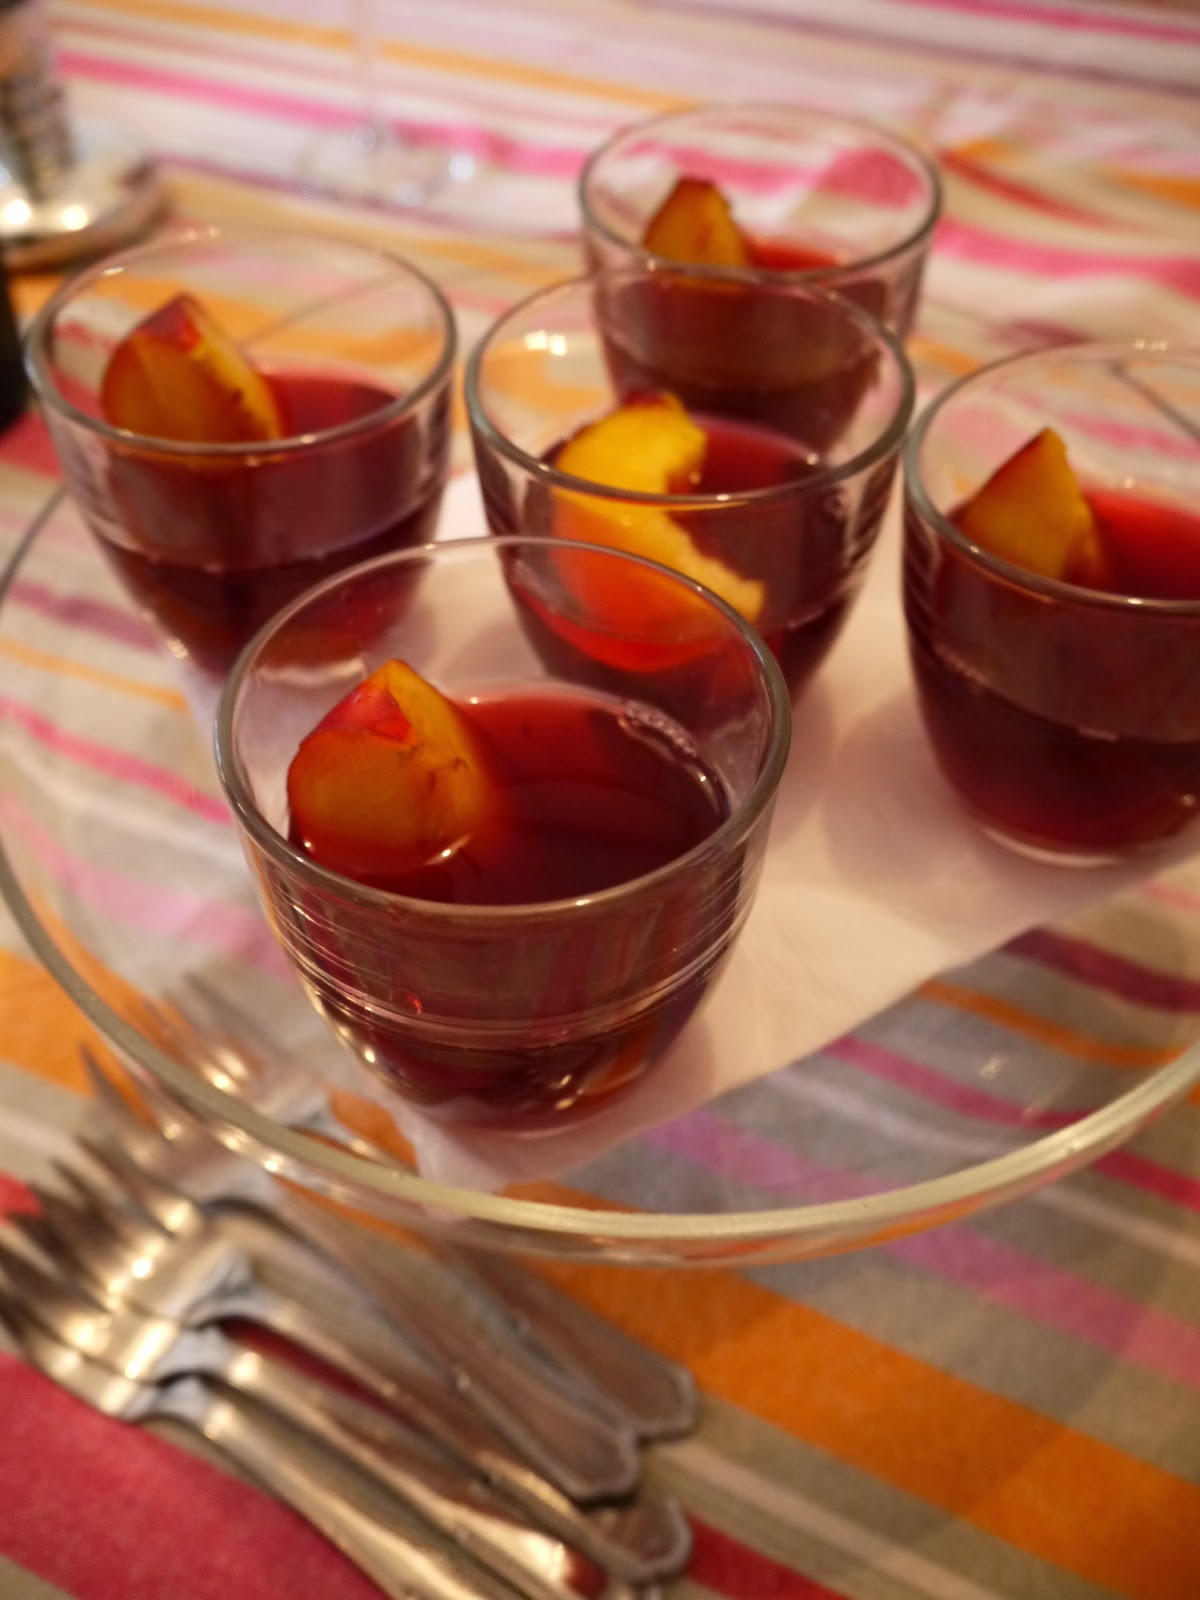 Sicilian peach in wine by Appetit Voyage